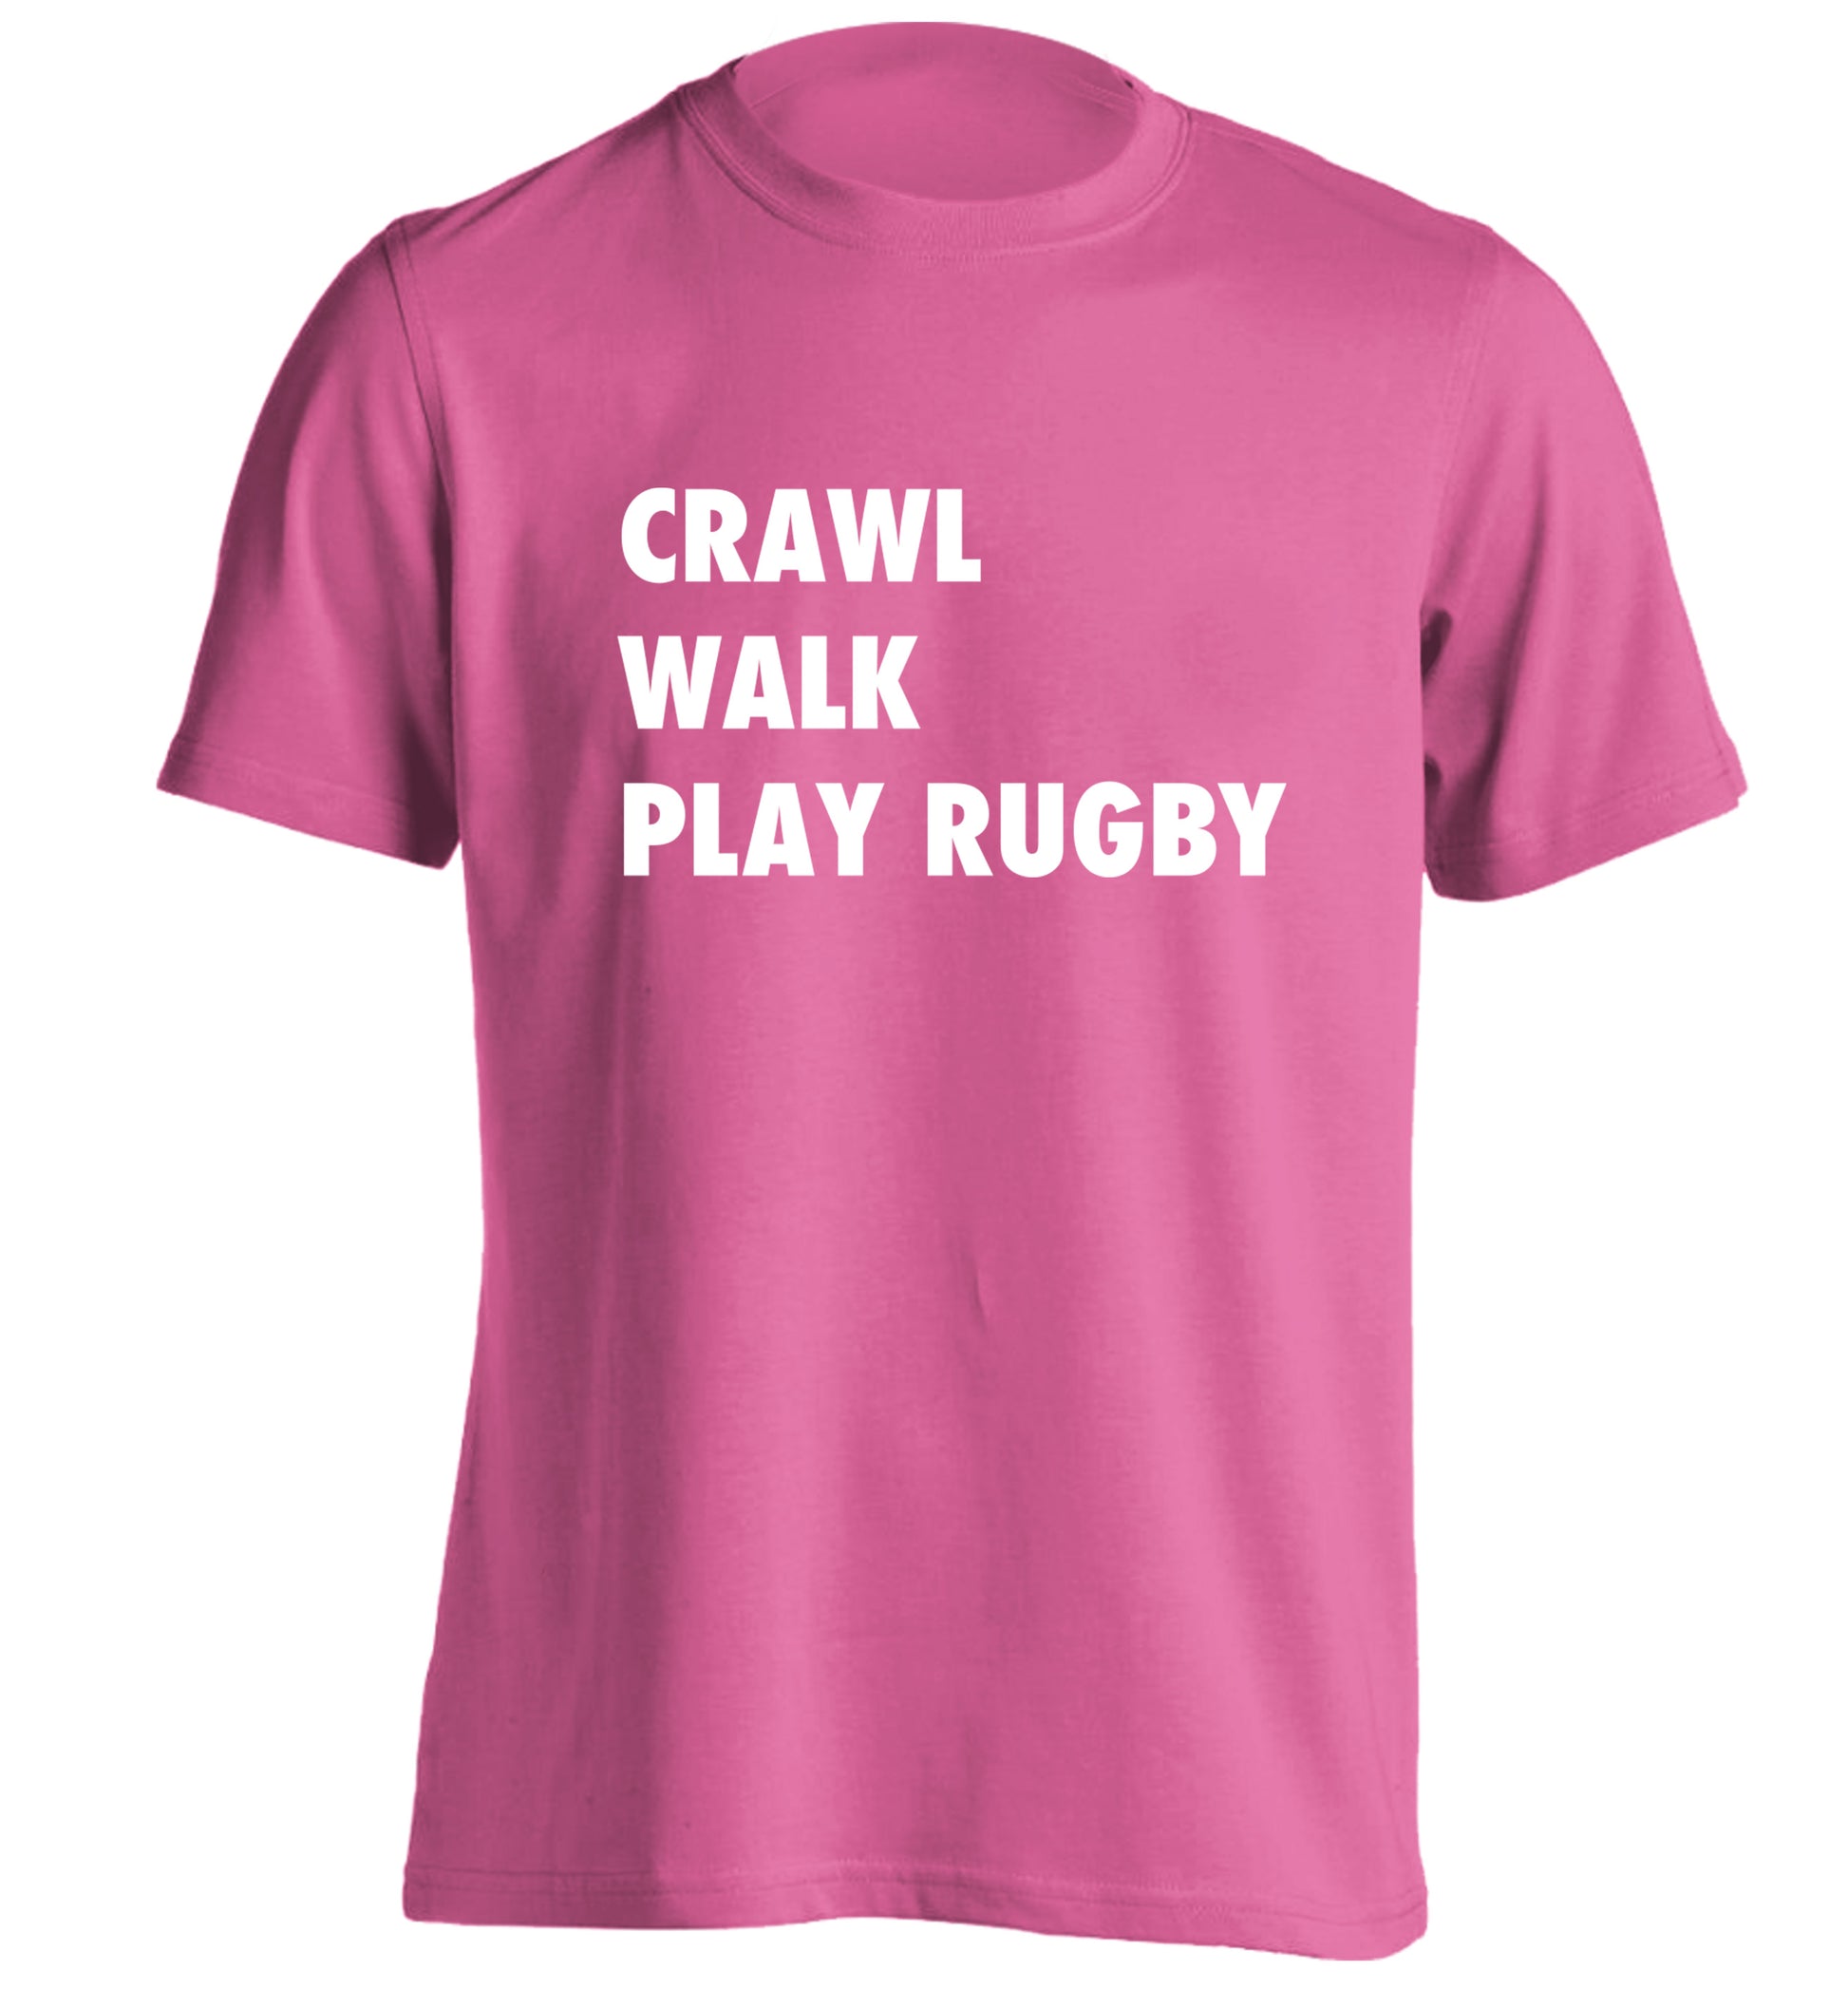 Eat, sleep, play rugby adults unisex pink Tshirt 2XL